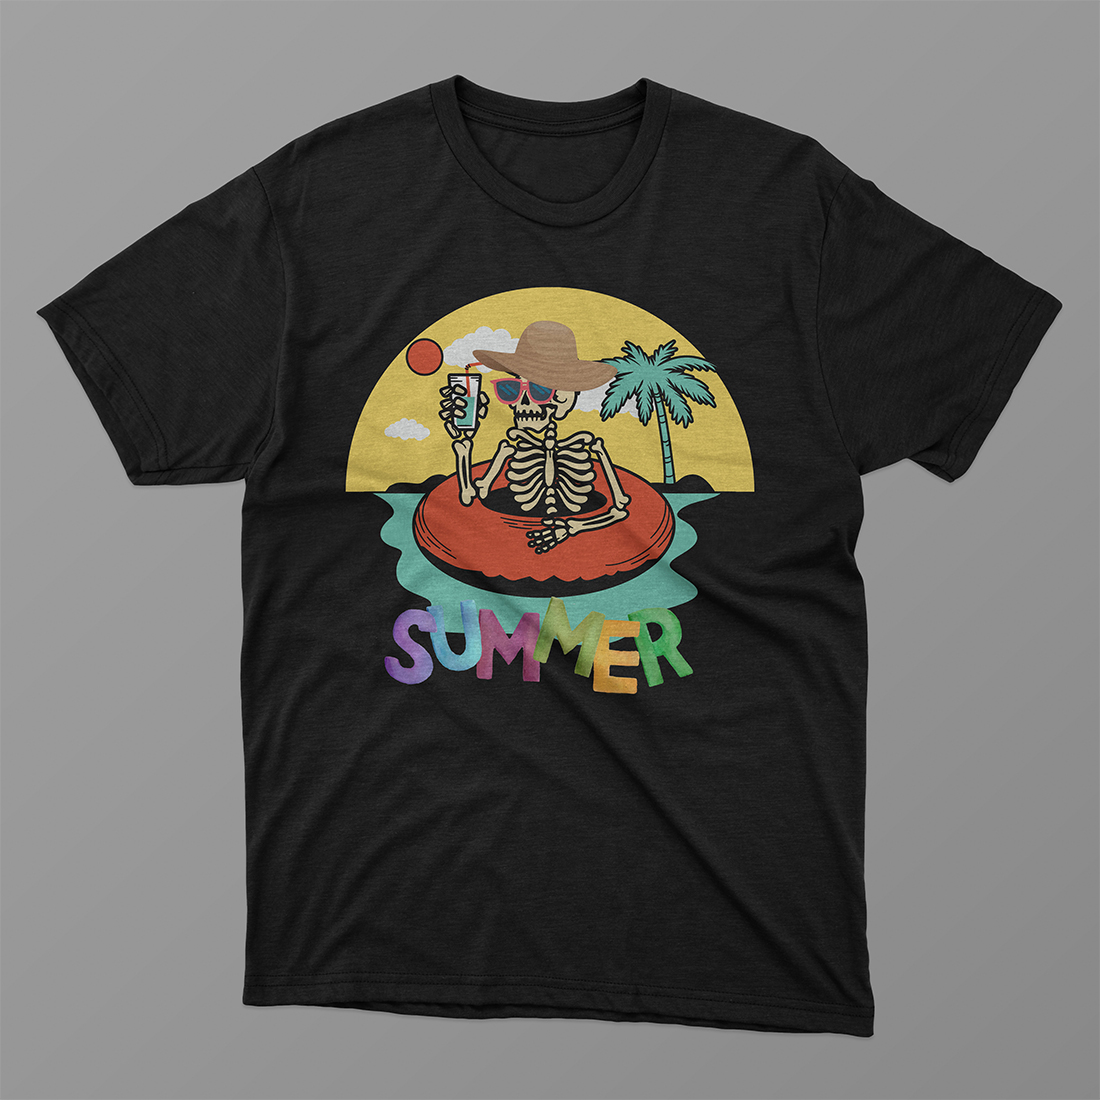 Summer T Shirt Design cover image.